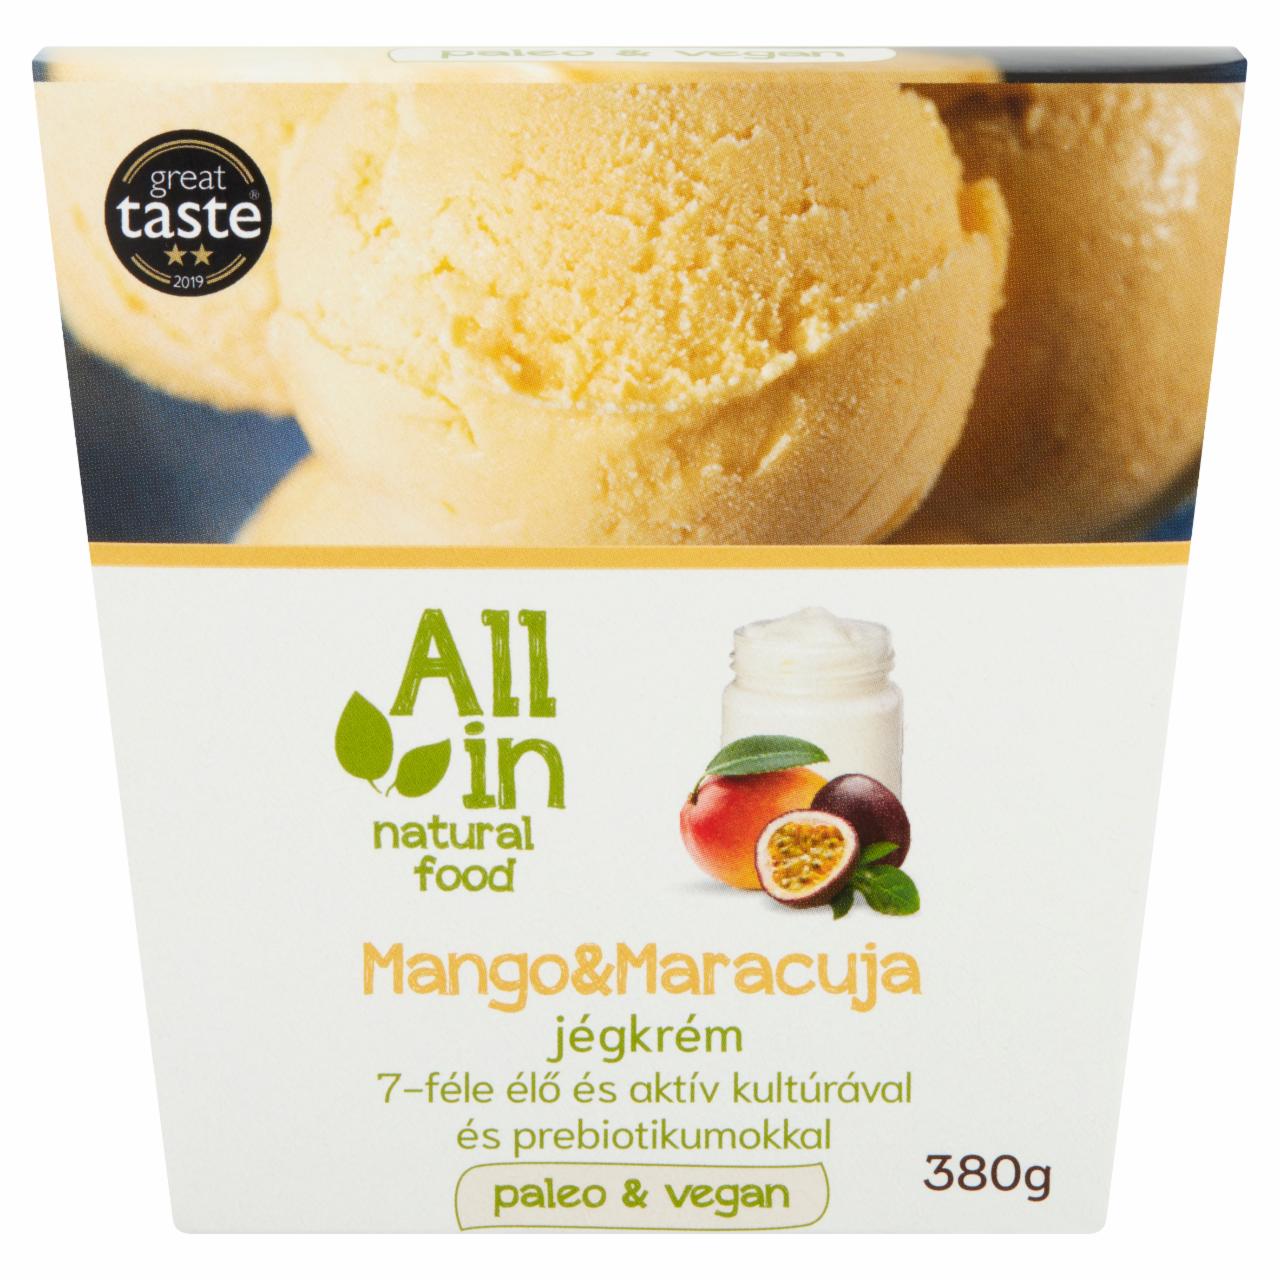 Képek - ALL IN natural food Mango & Maracuja jégkrém 380 g